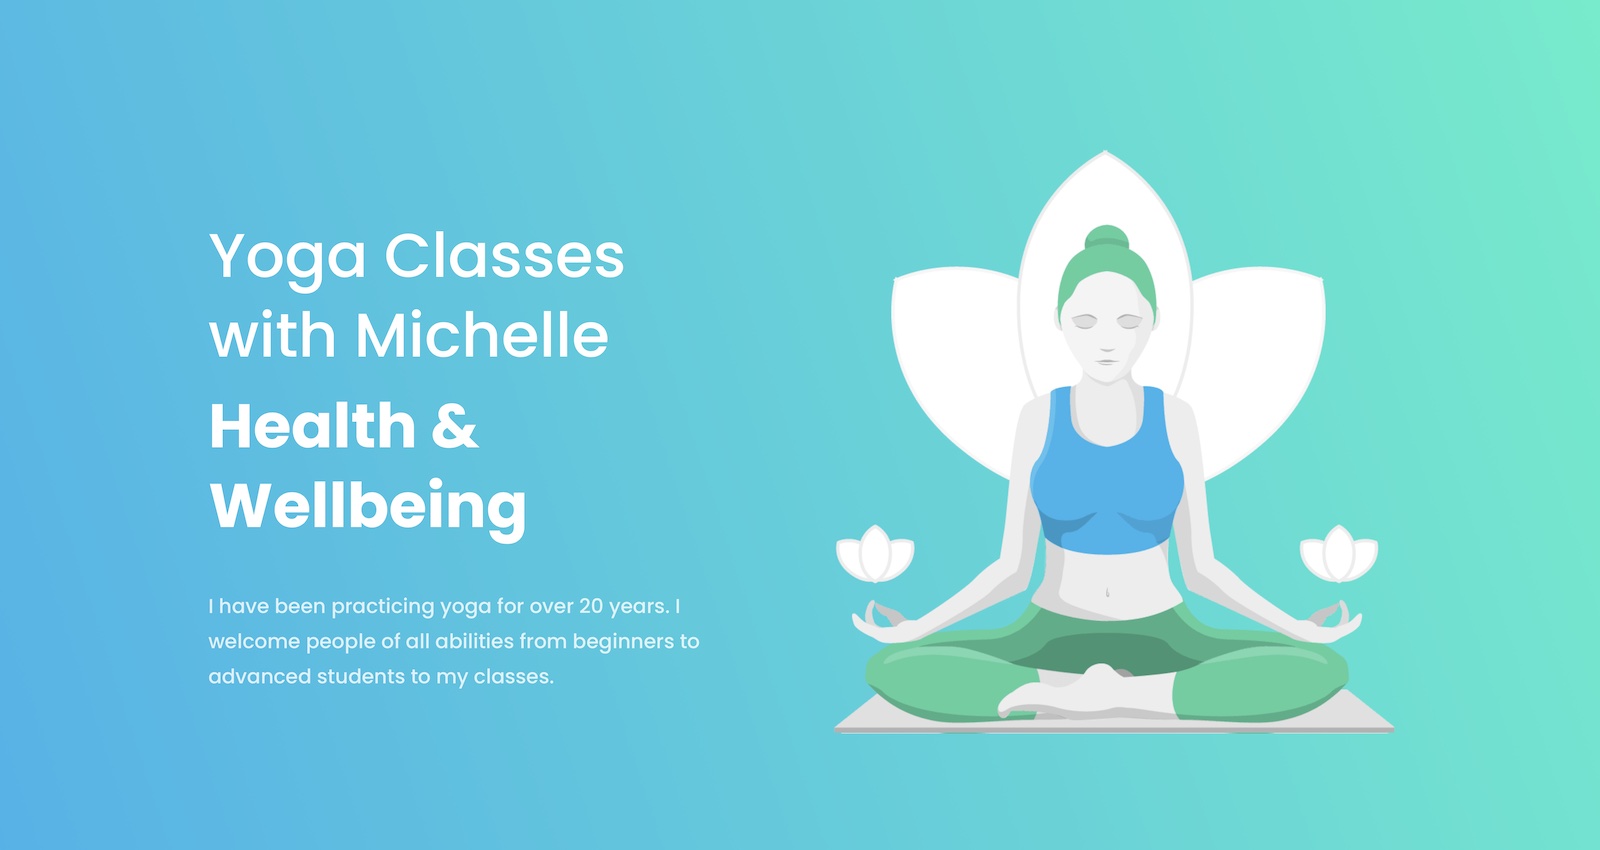 Yoga Classes with Michelle Website Design